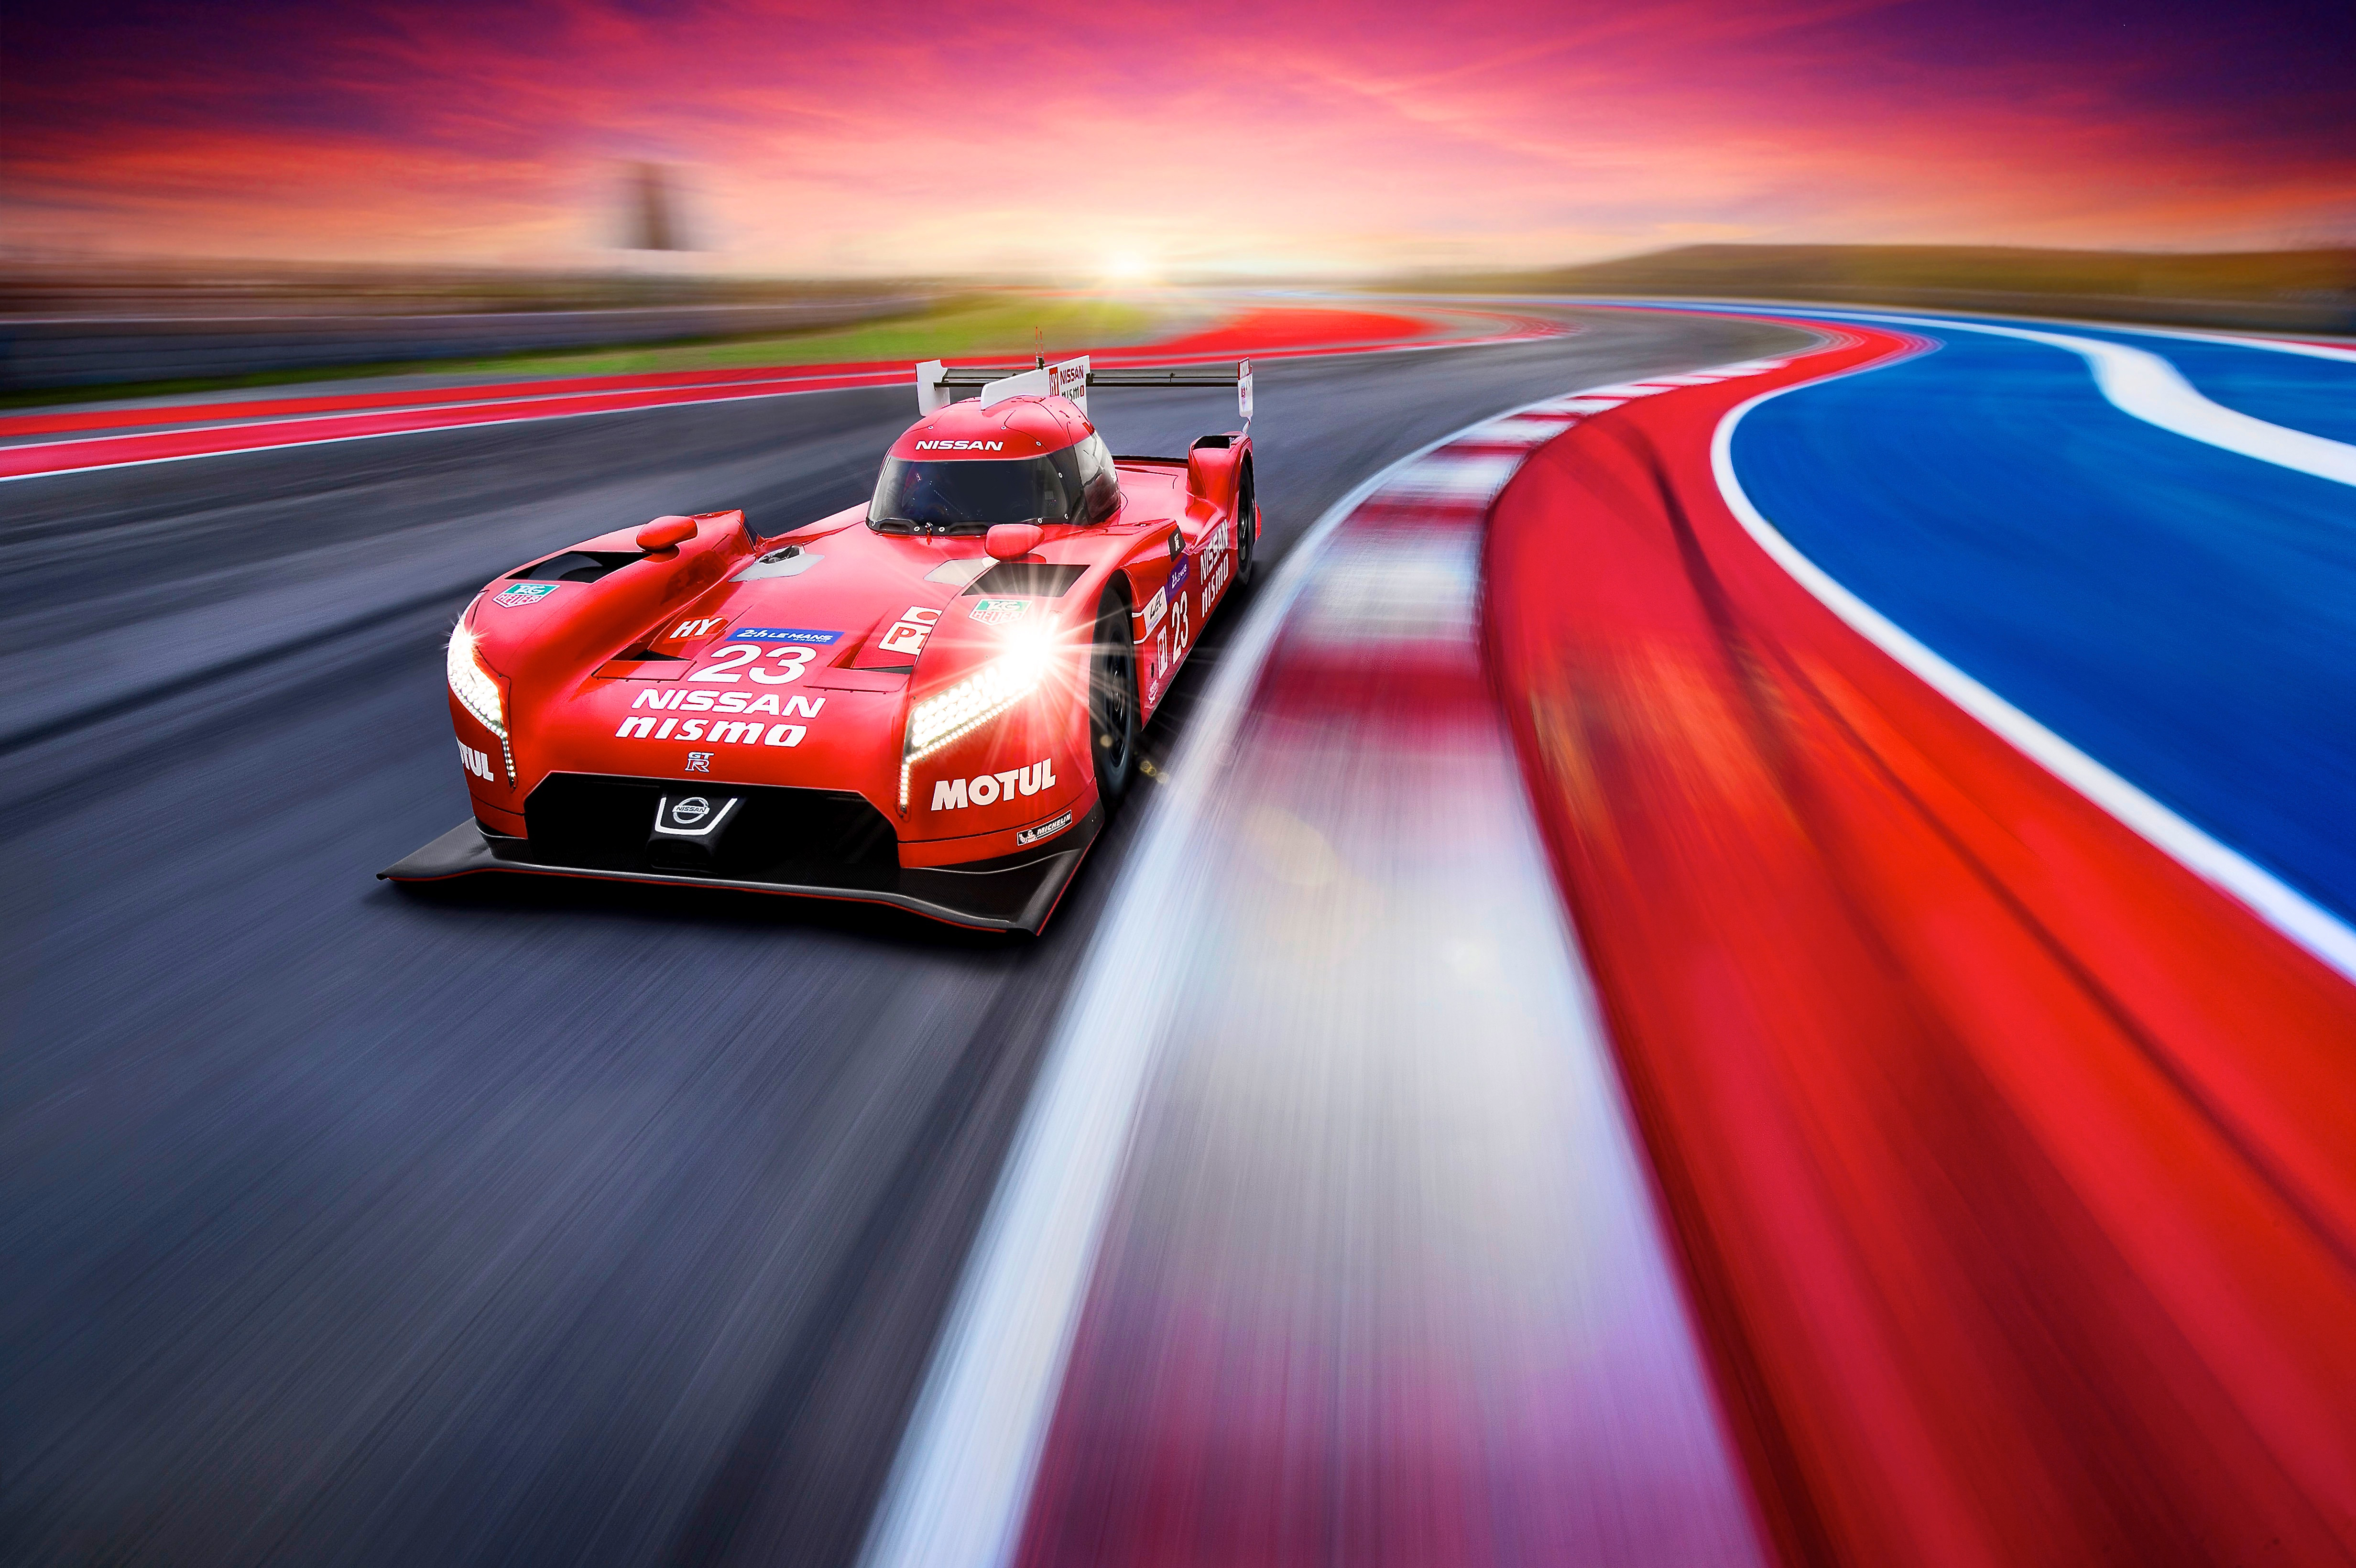 Cars speed racing